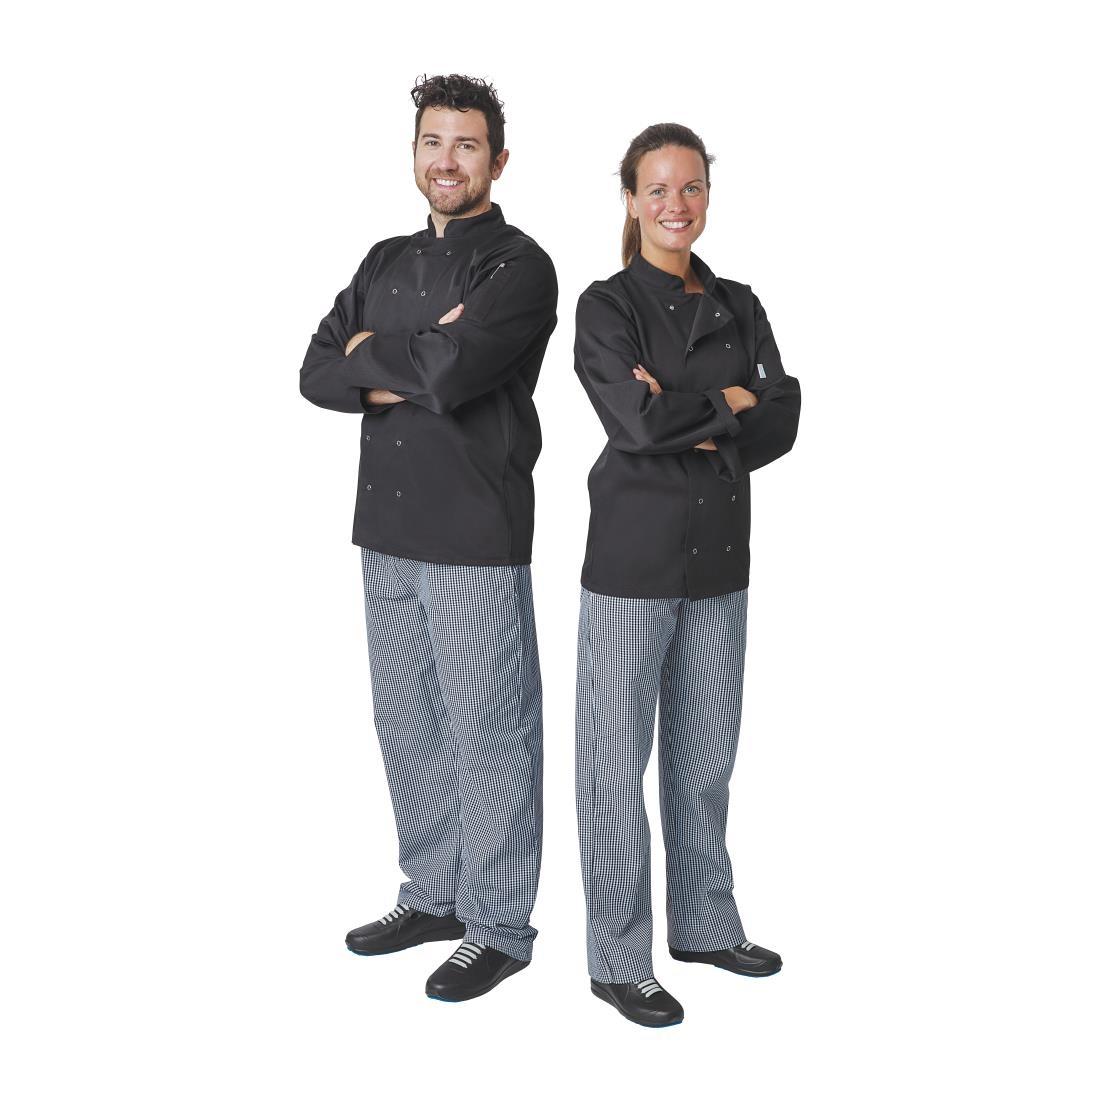 Whites Vegas Unisex Chefs Jacket Long Sleeve Black S - A438-S  - 3